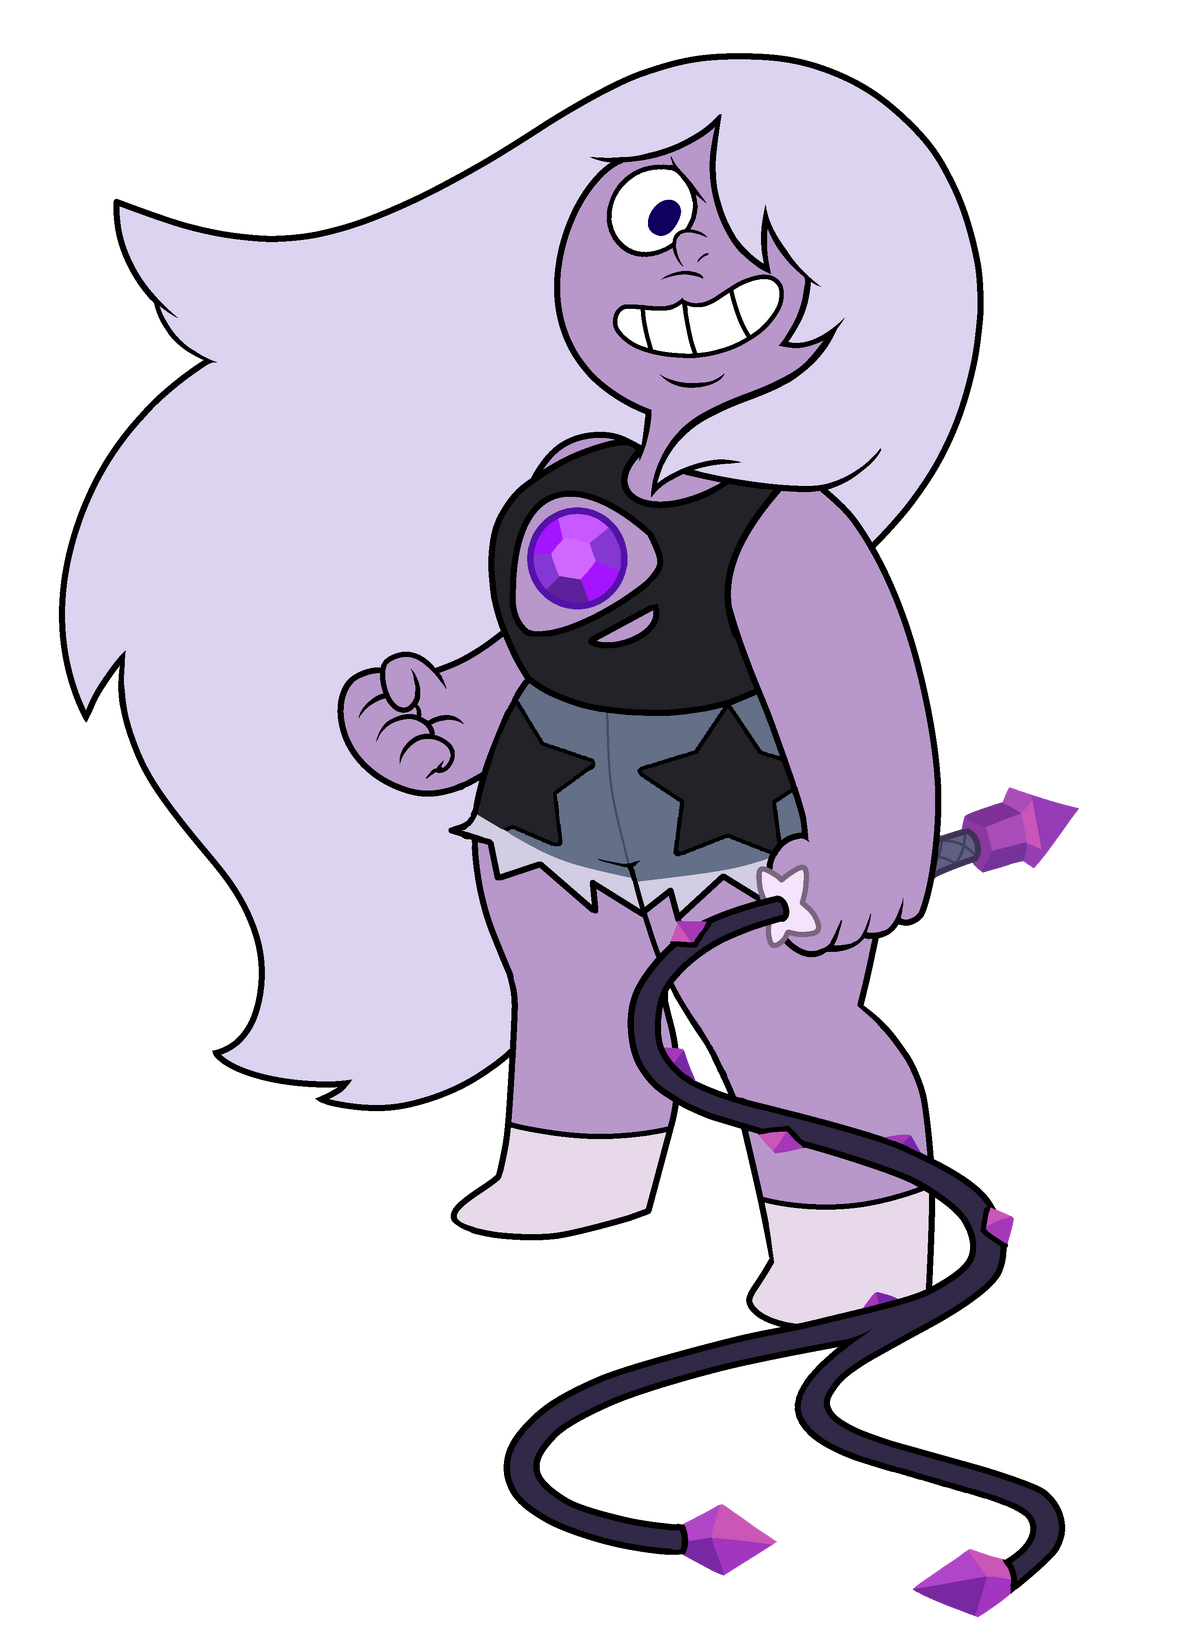 Steven Universe: Attack the Light! Amethyst Purple Garnet Peridot